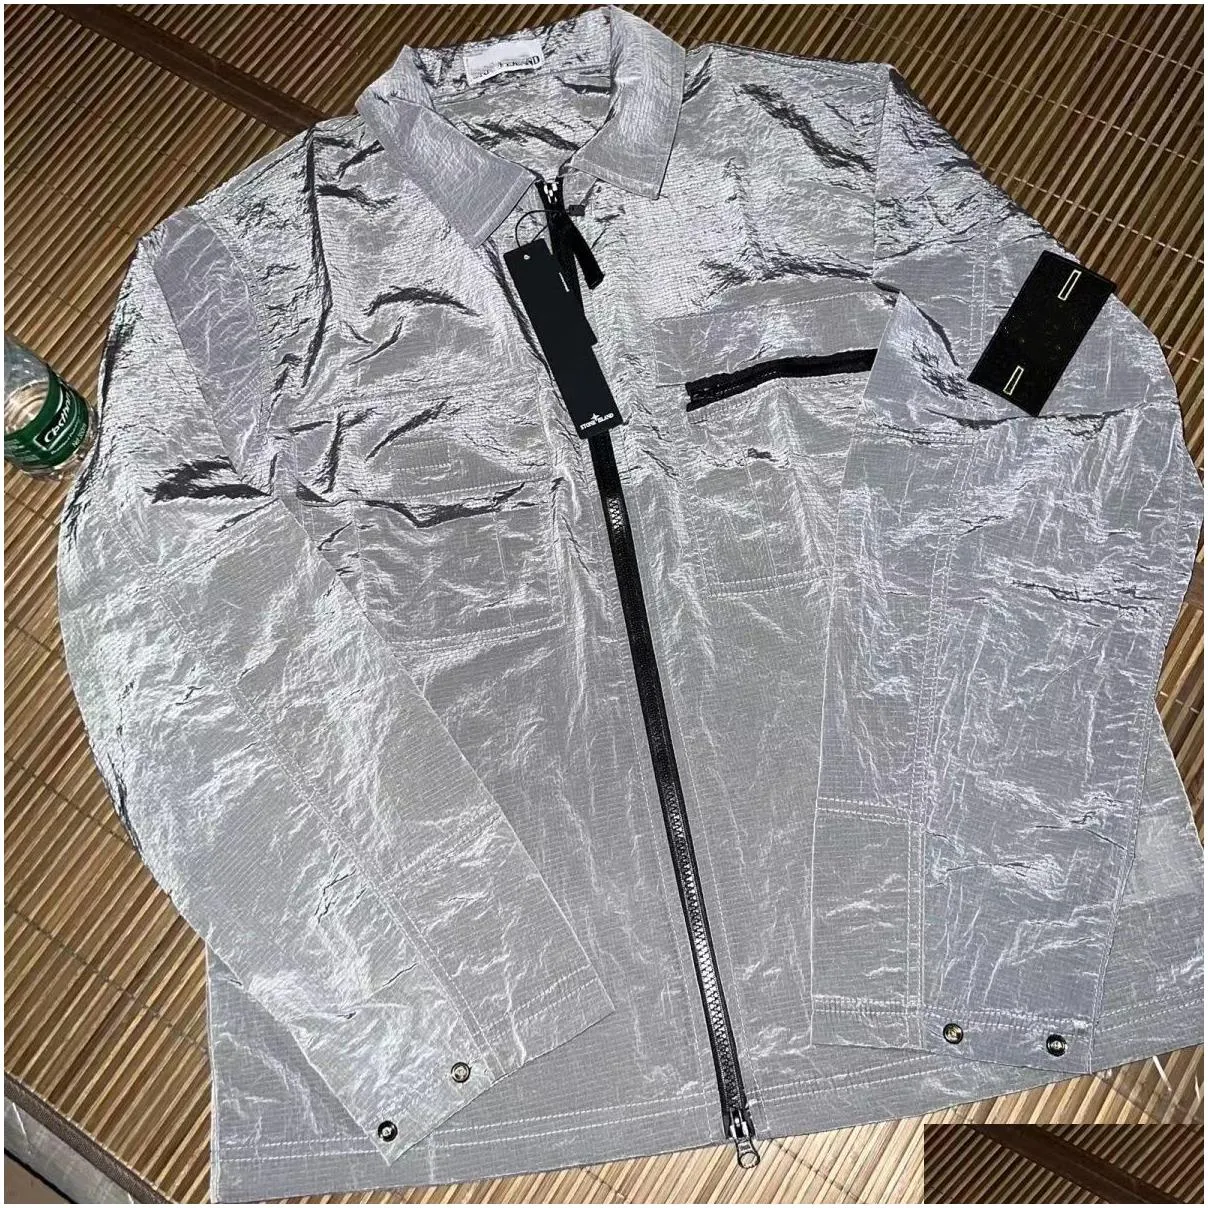 st0ne designer black shirts skin coat with logo mens jackets designer outdoor summer light jacket jacket fishing mountaineering wear